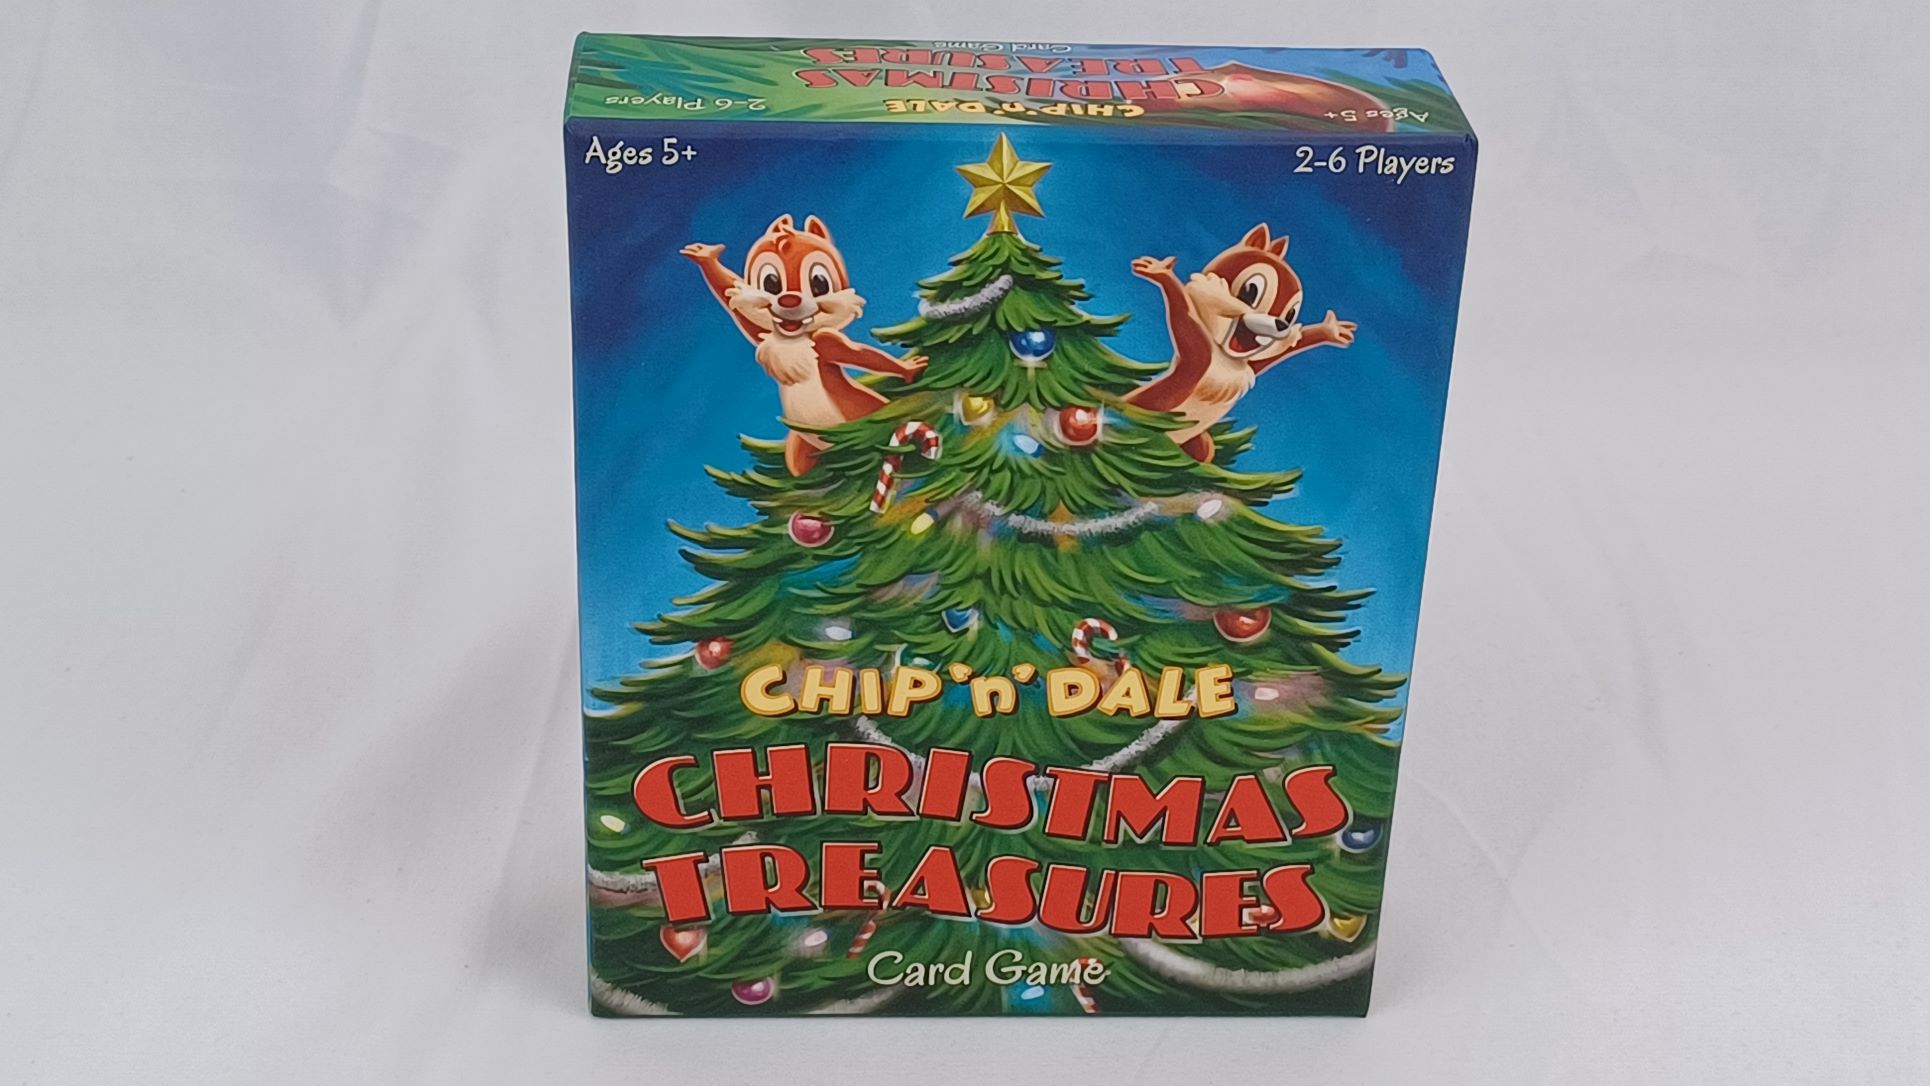 Box for Chip 'n' Dale Christmas Treasures